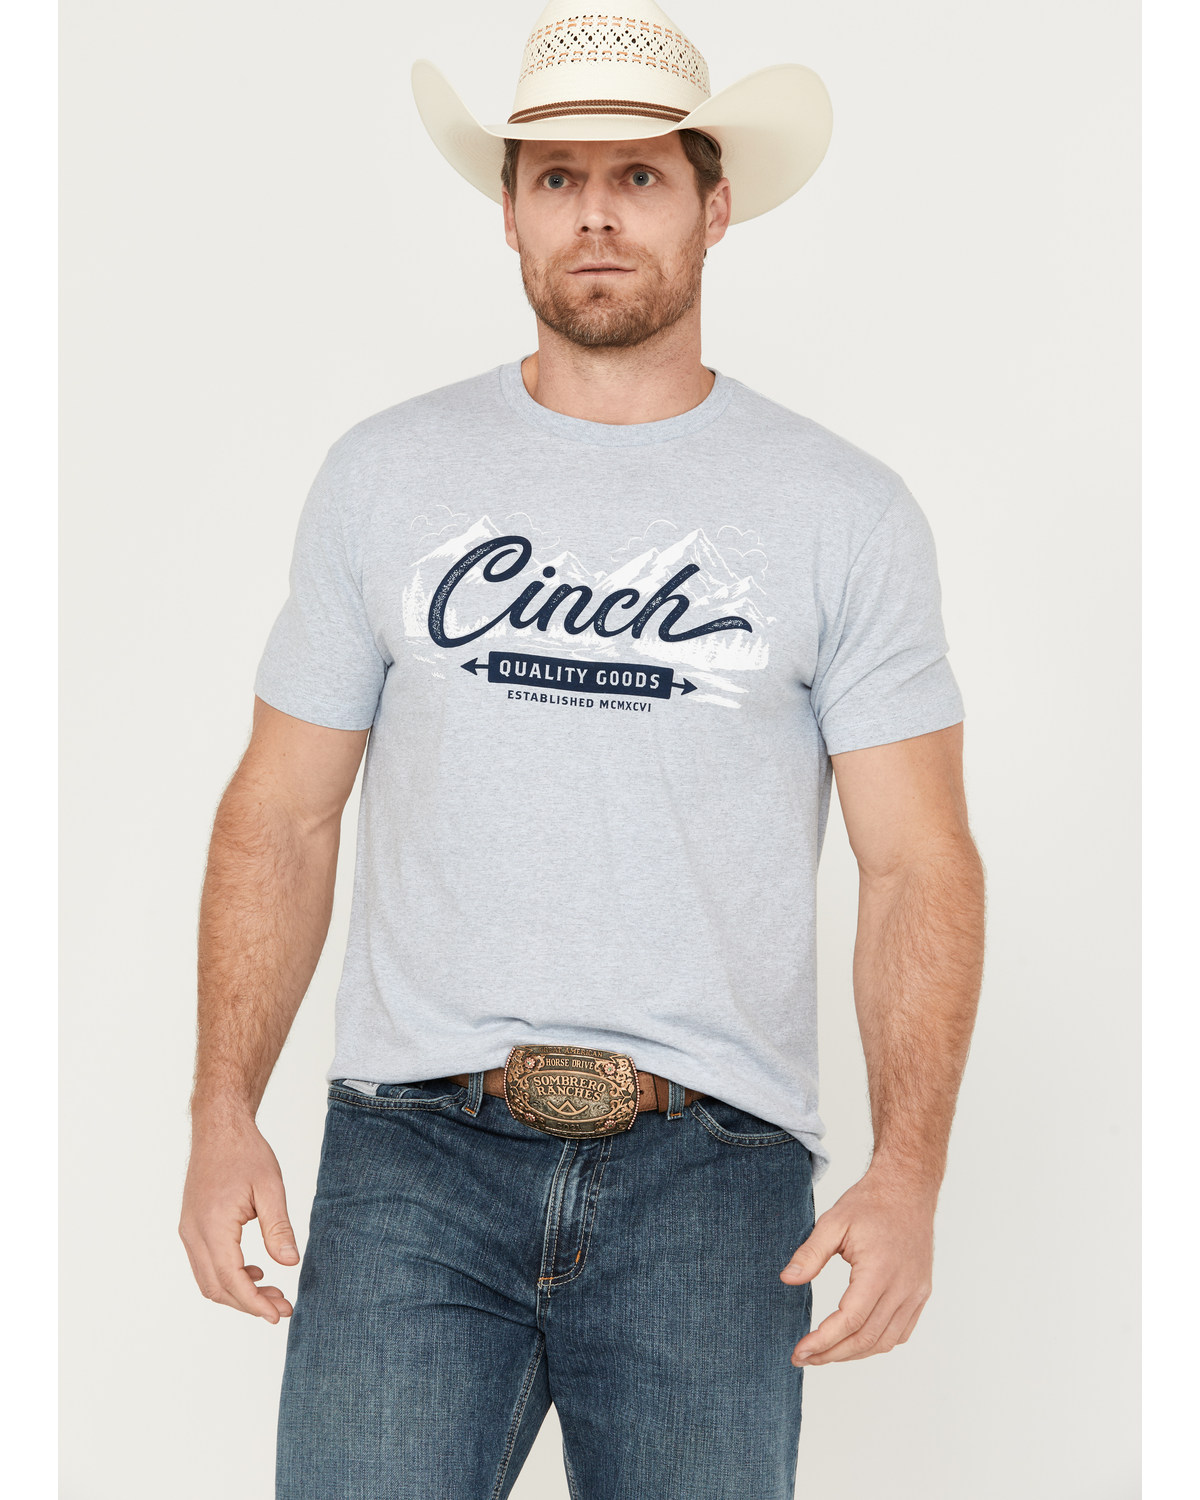 Cinch Men's Quality Goods Short Sleeve Graphic T-Shirt